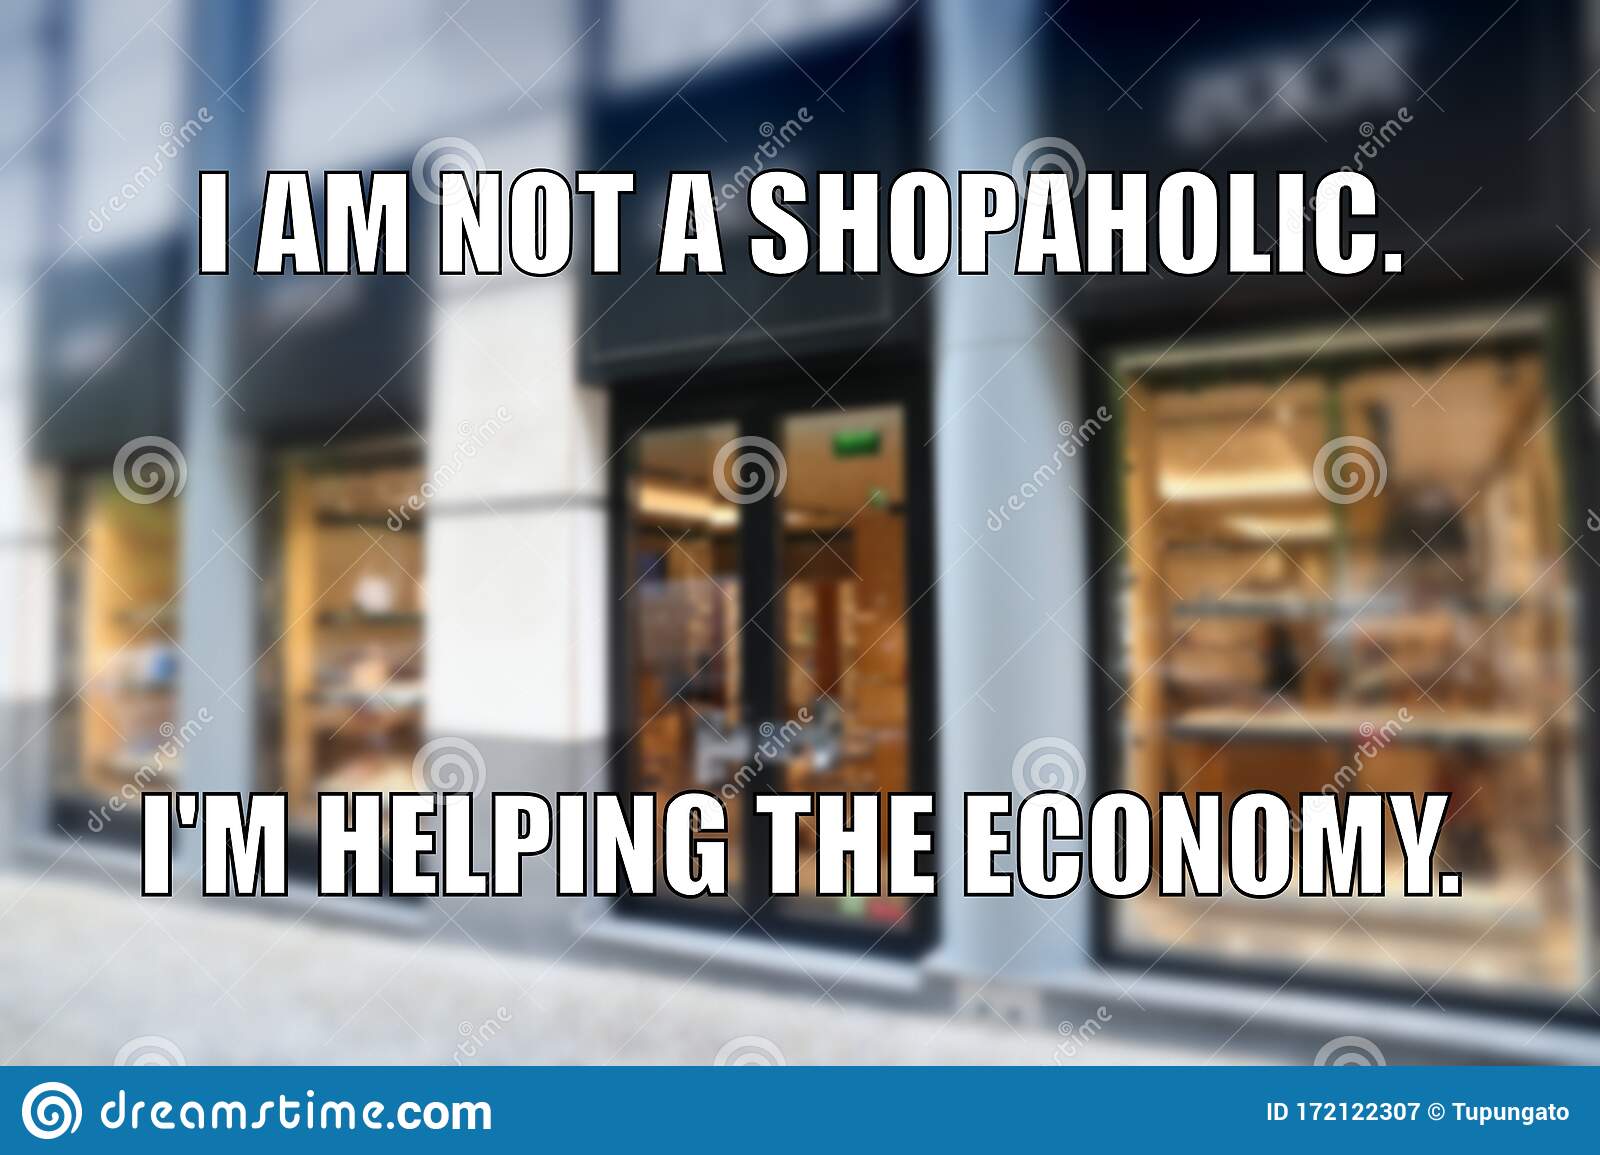 shopping-addiction-meme-funny-social-media-sharing-helping-economy-172122307.jpg